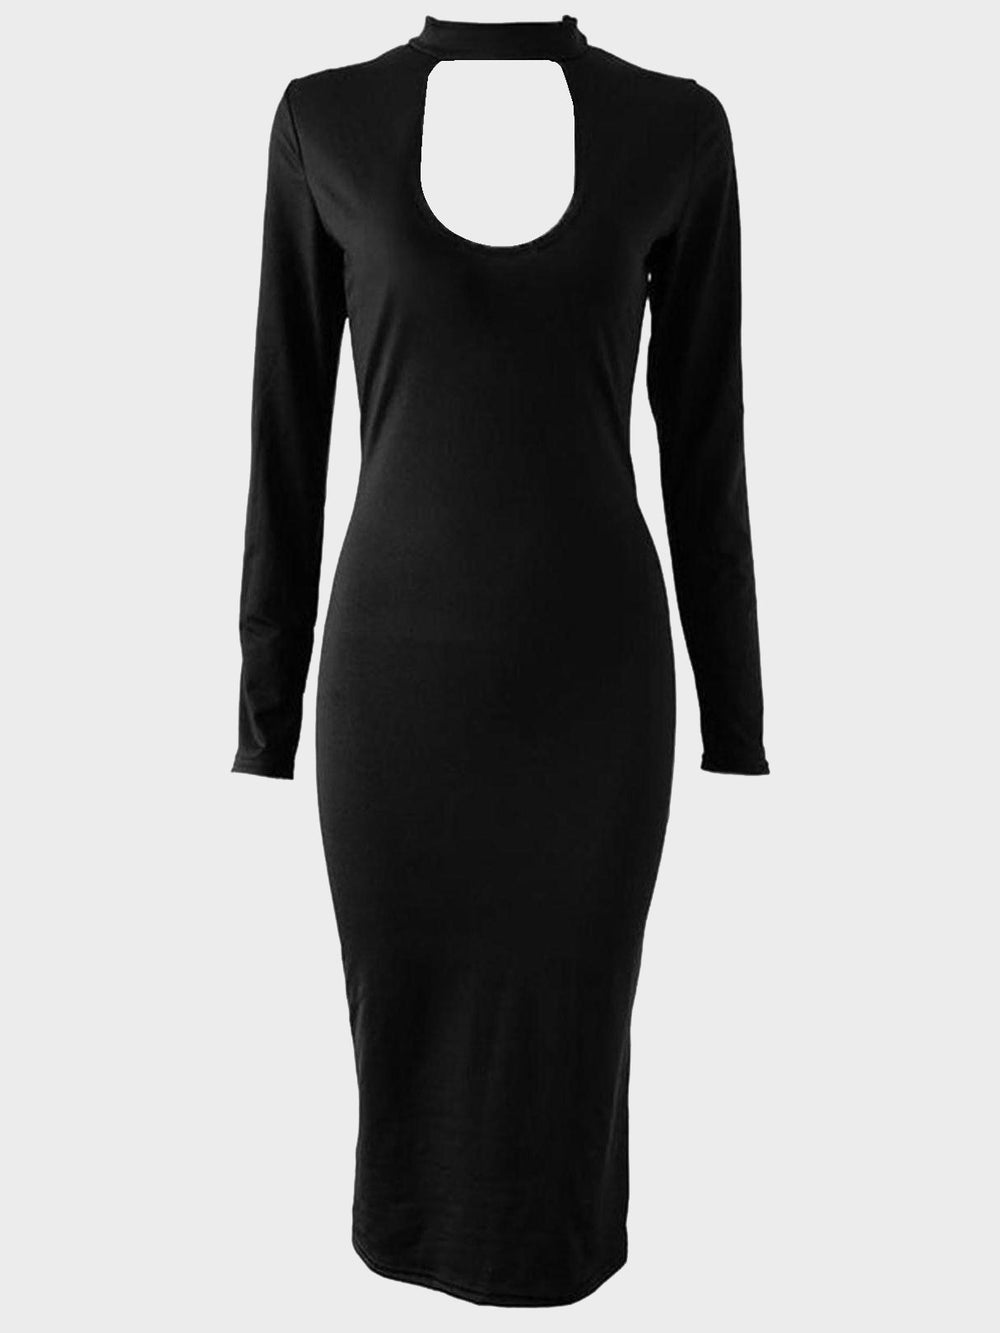 Black Perkins Collar Long Sleeve Plain Cut Out Dresses